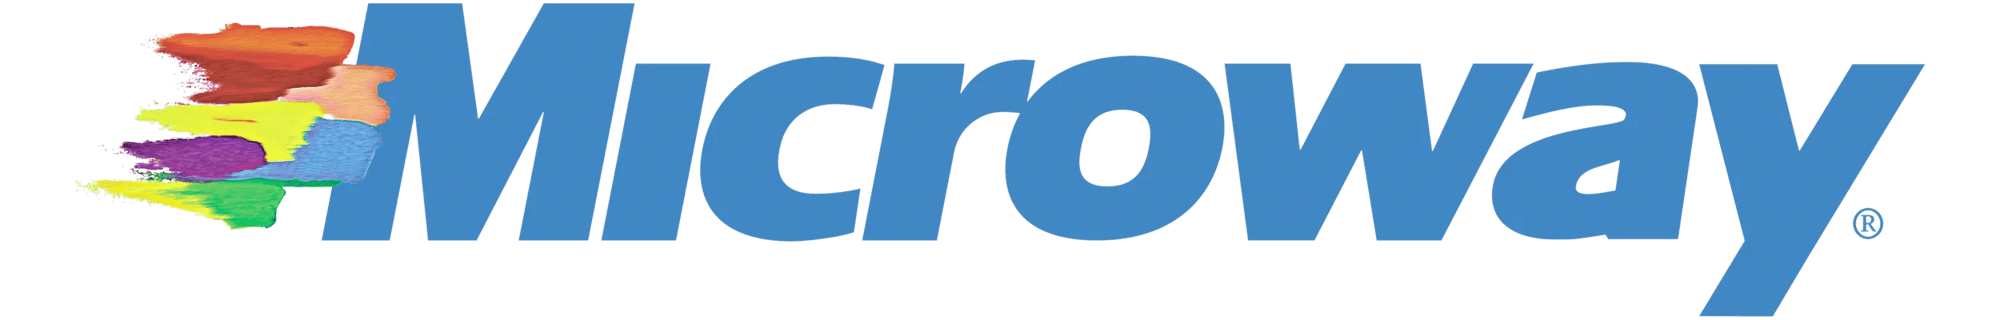 microroway_logo